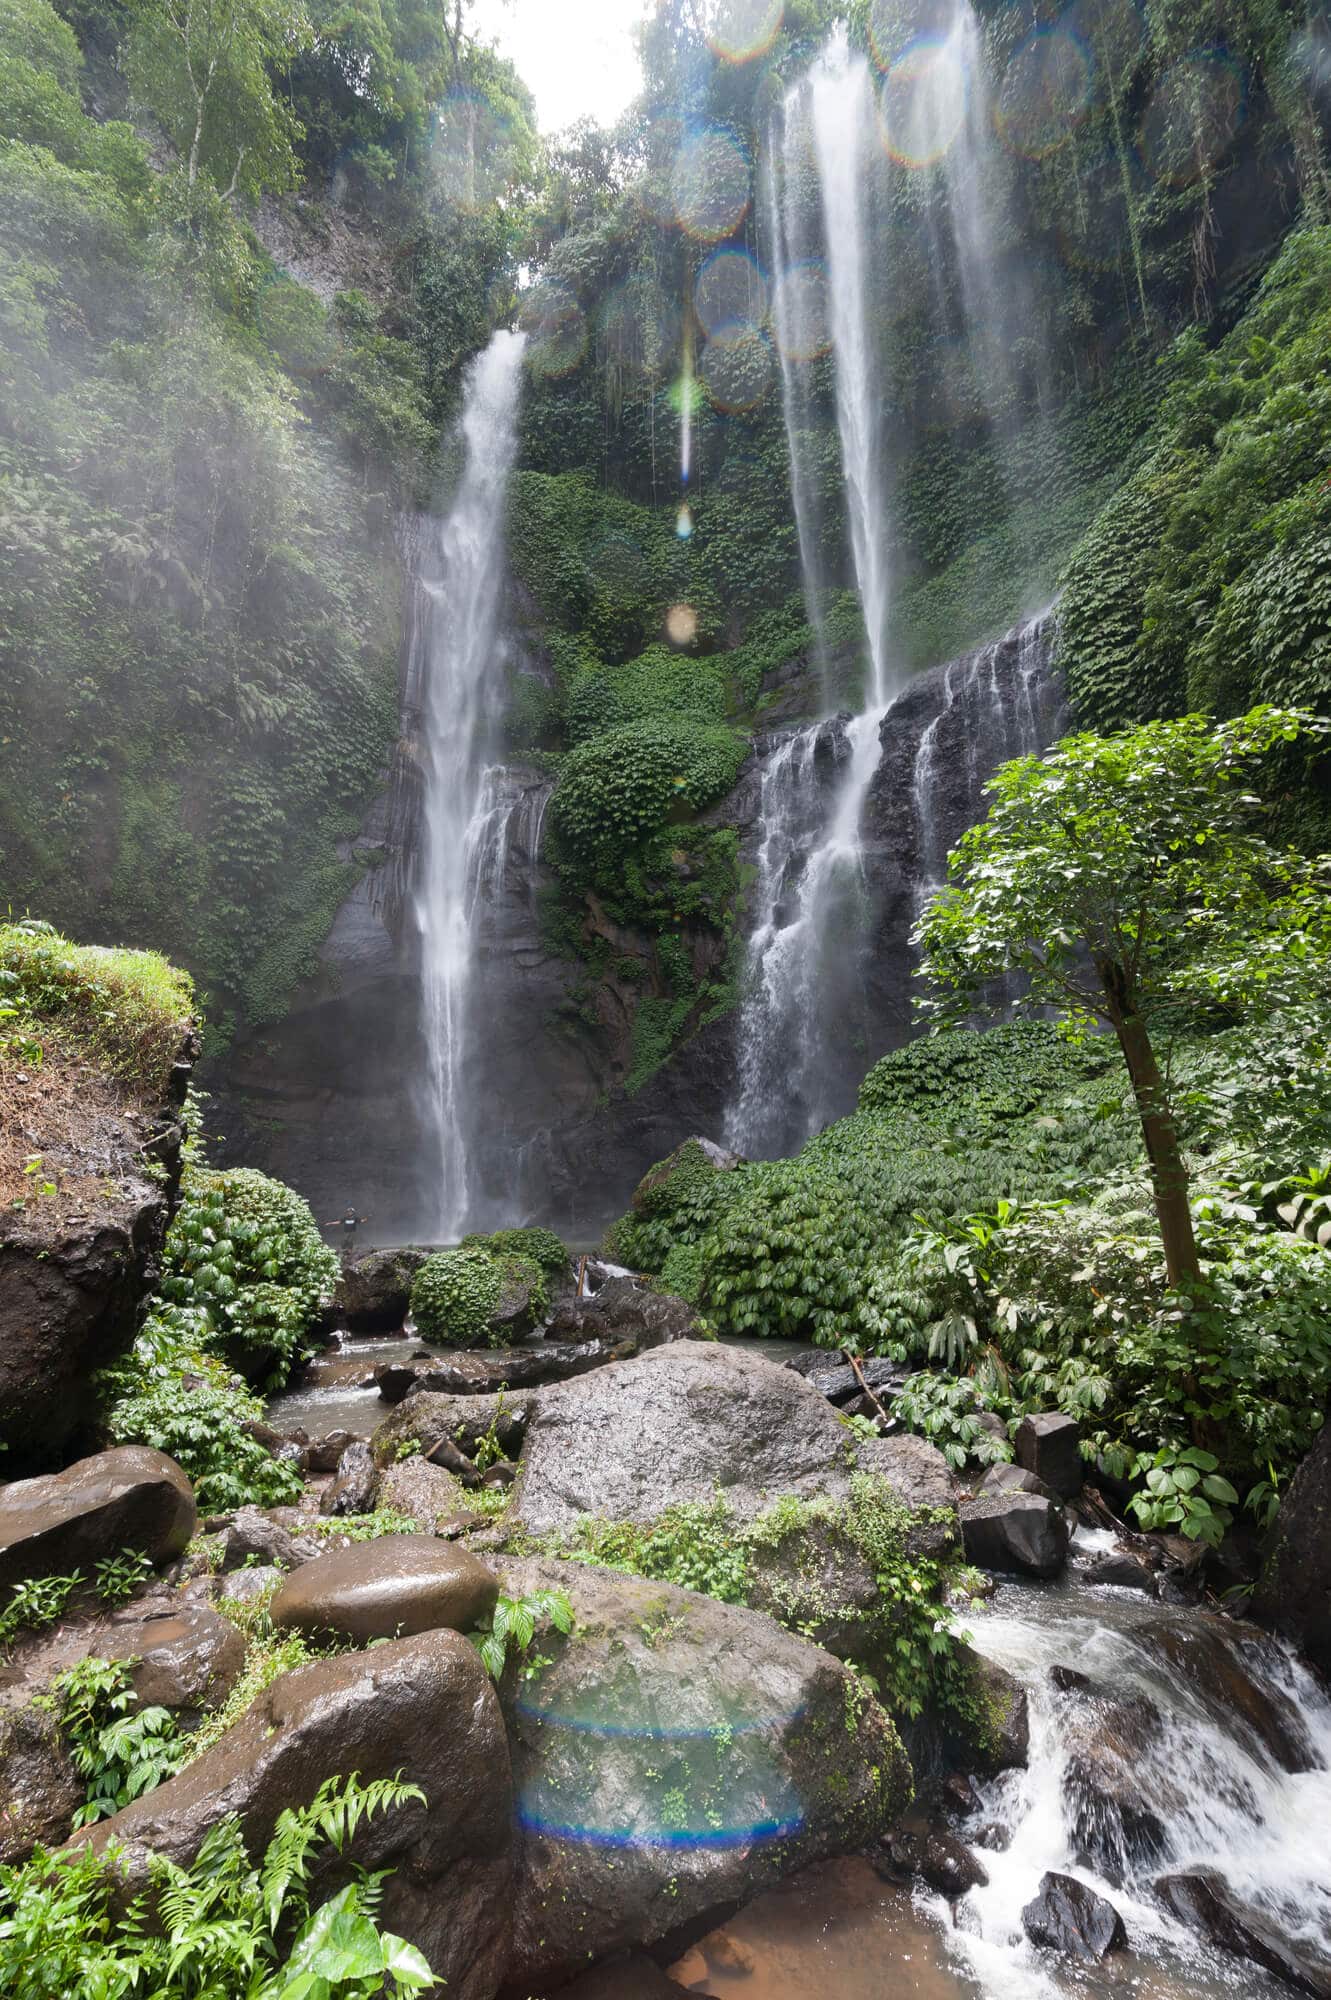 Sekumpul Waterfall in Bali seen from the bottom of the valley